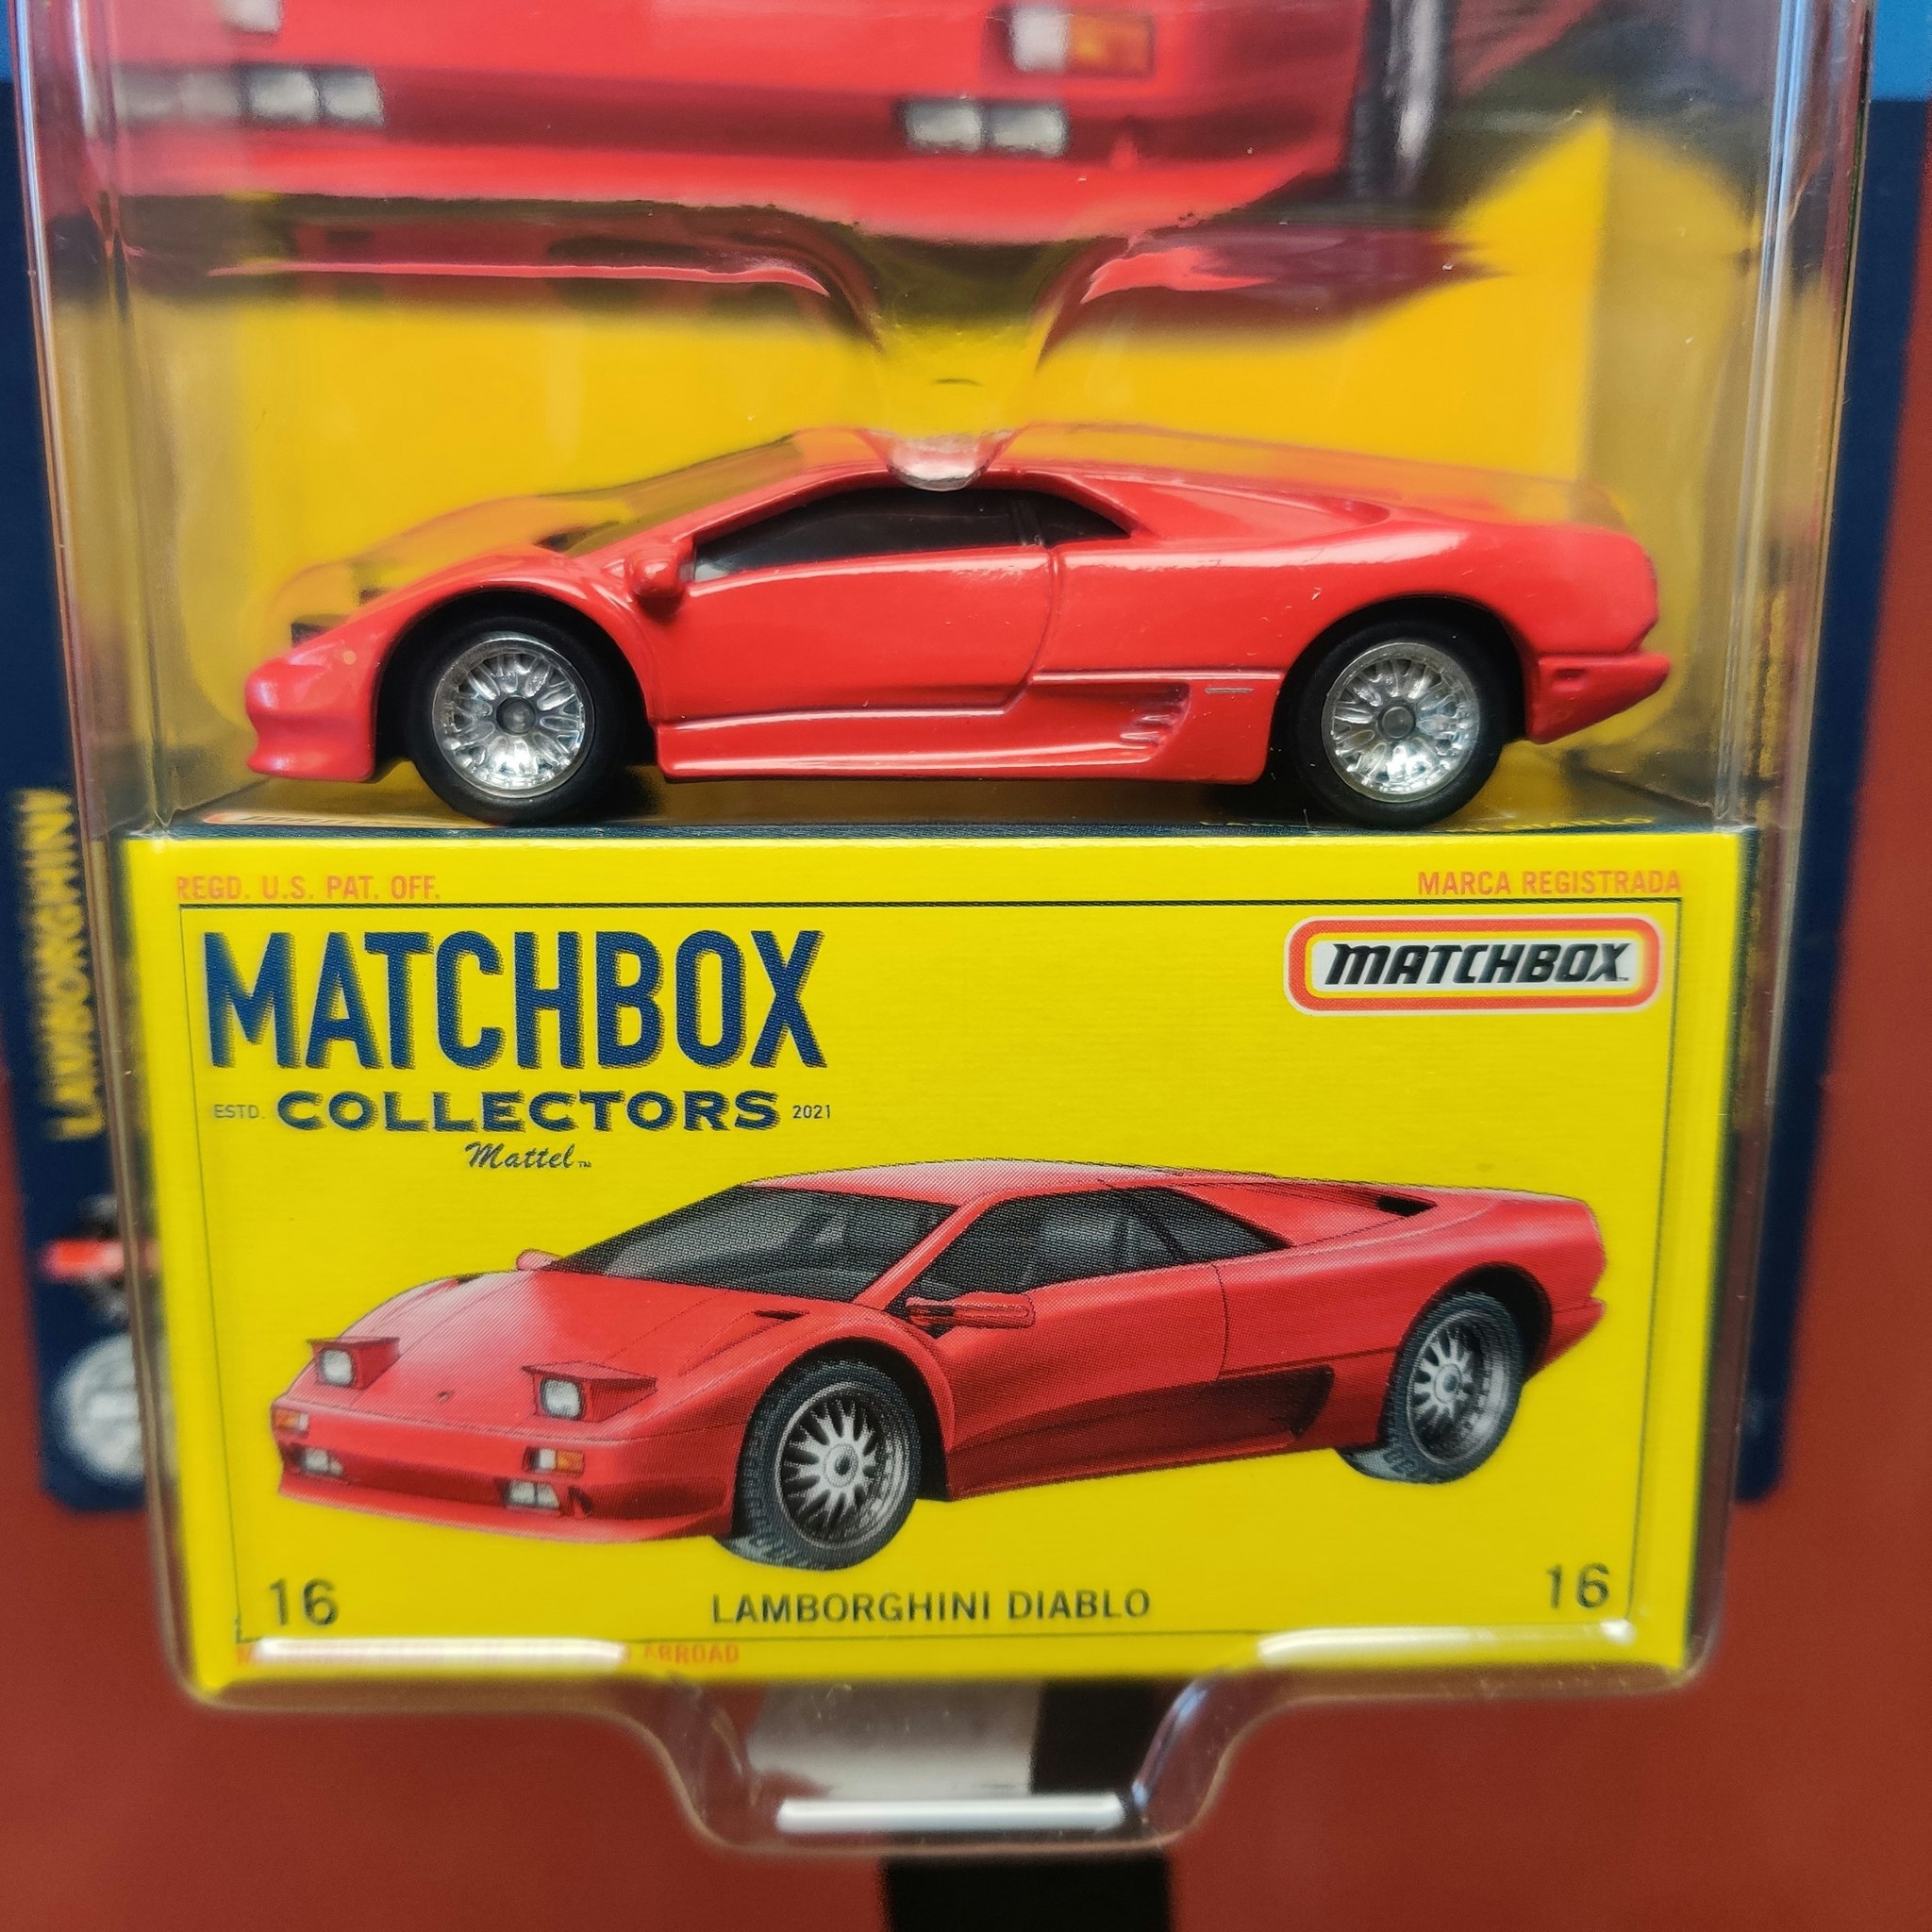 Skala 1/64 MATCHBOX - Collectors - Lamborghini Diablo Uppfällda lyktor